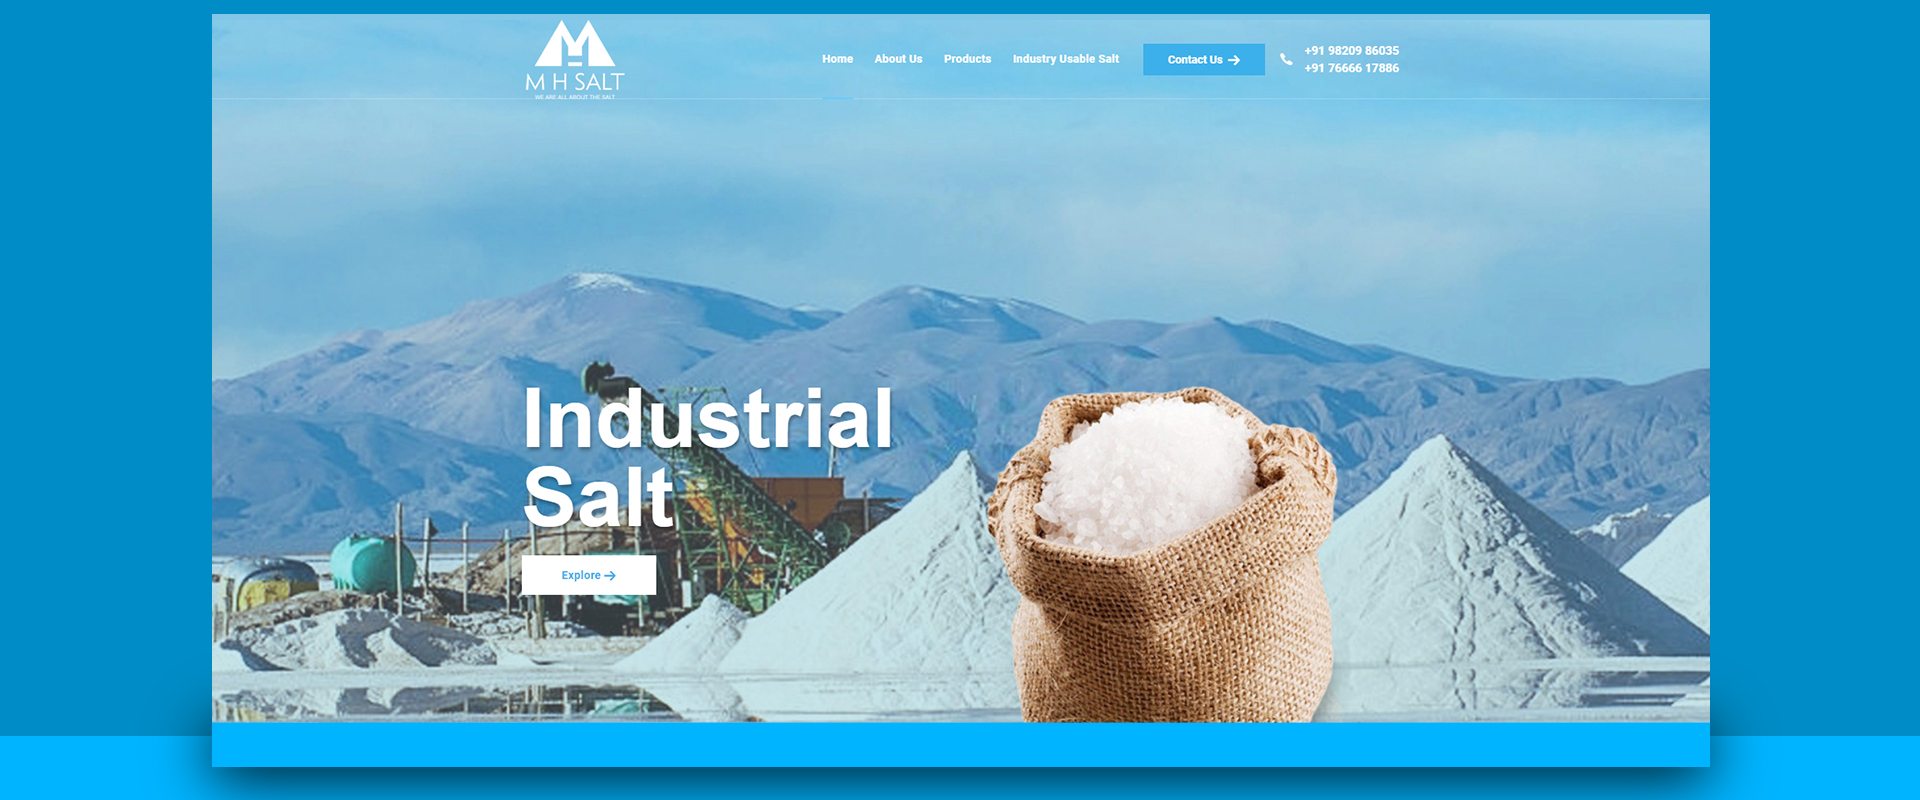 M.H.SALT website